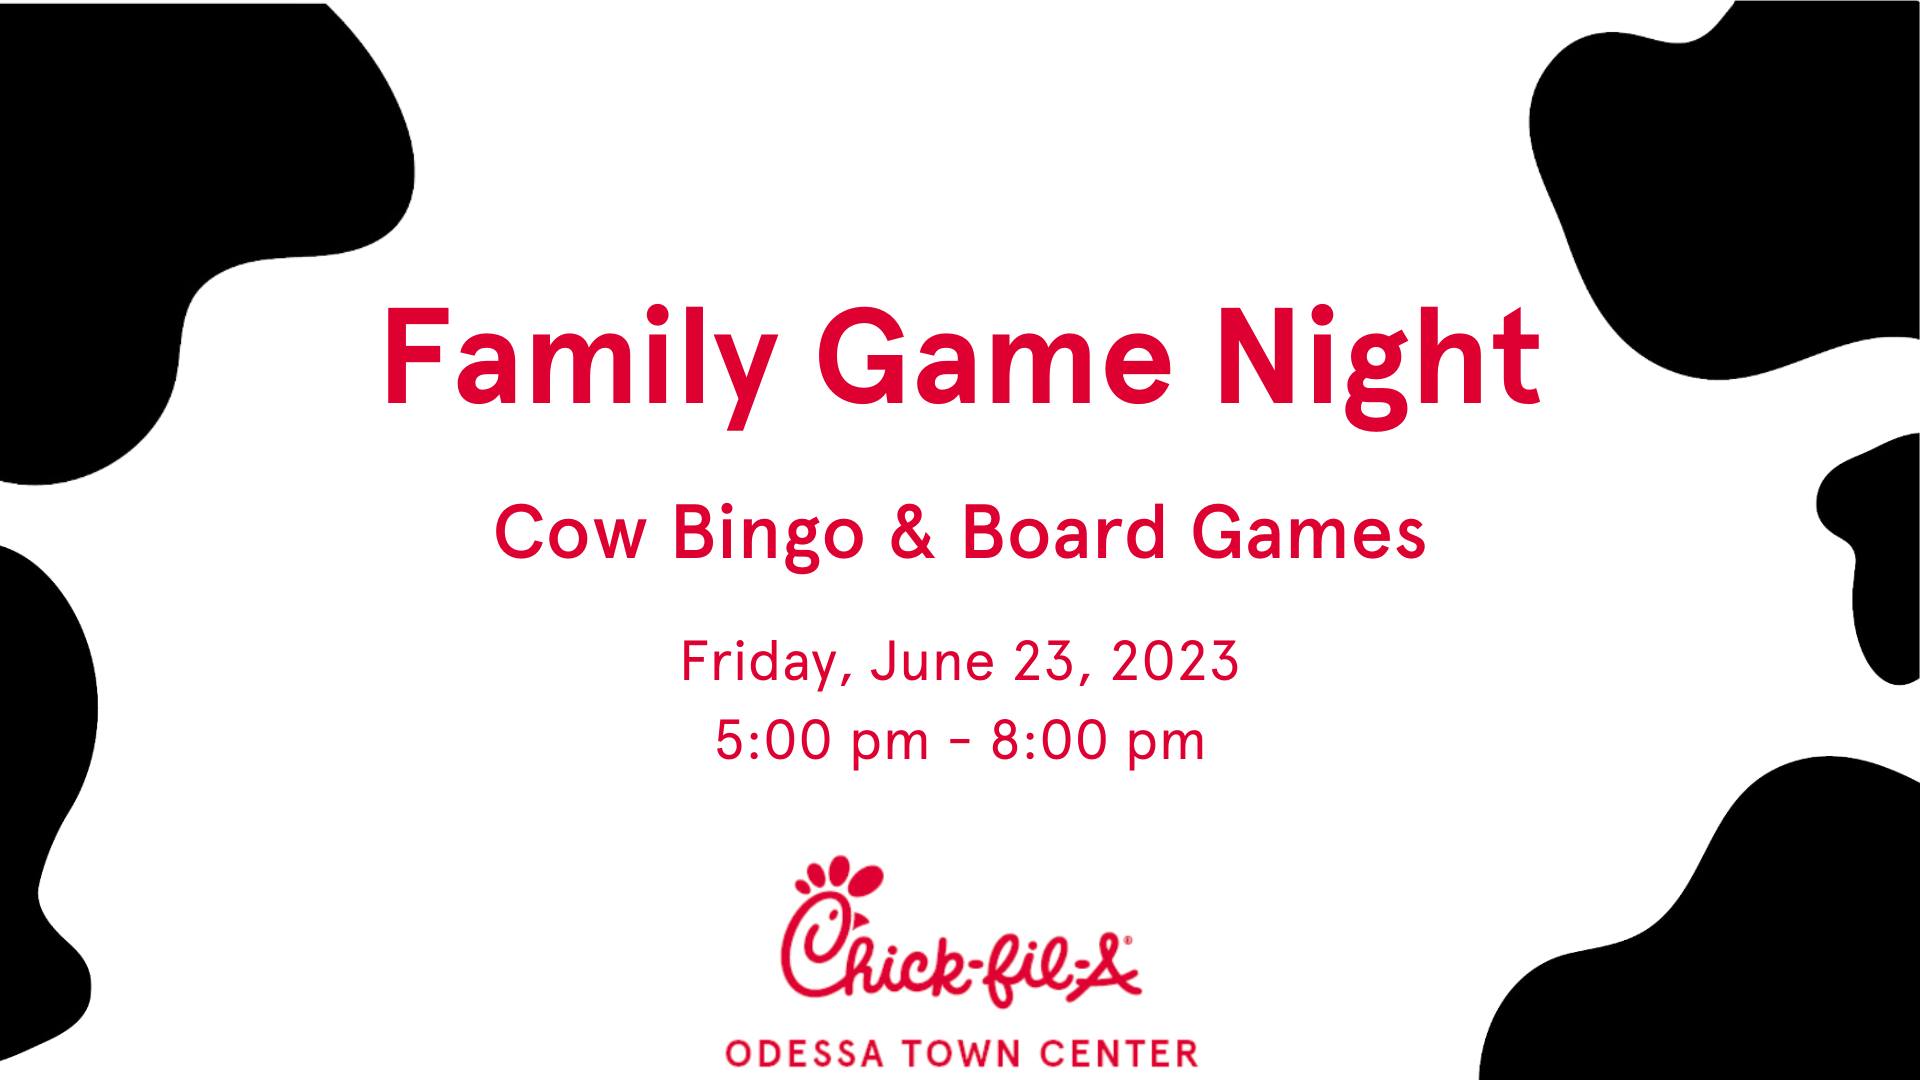 Family Game Night - Cow Bingo & Board Games